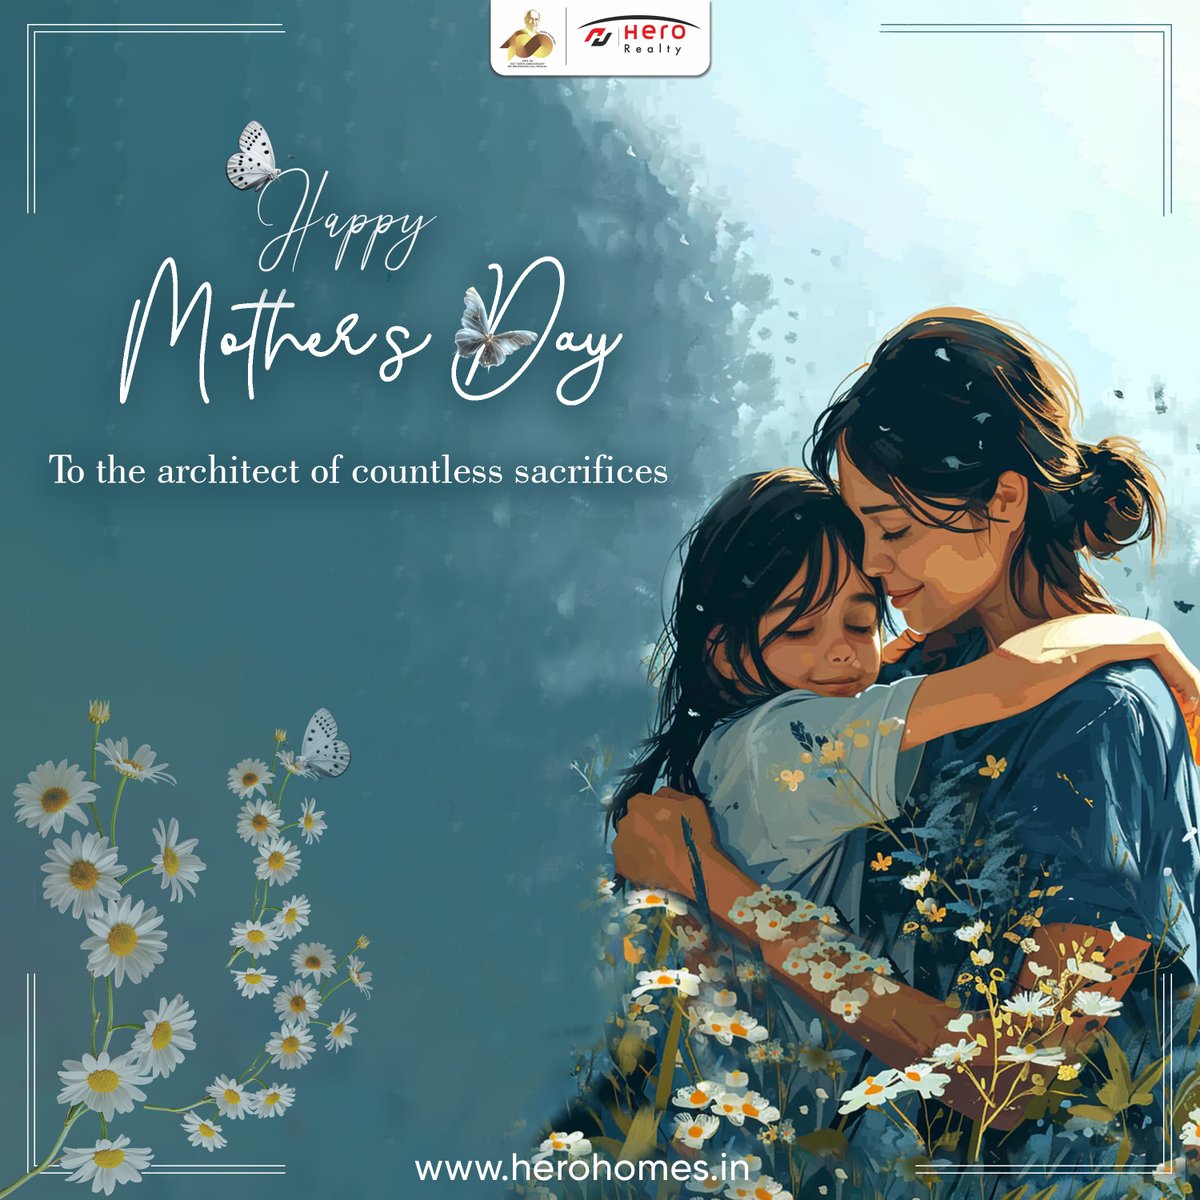 𝐇𝐞𝐫𝐞'𝐬 𝐭𝐨 𝐭𝐡𝐞 𝐛𝐫𝐢𝐥𝐥𝐢𝐚𝐧𝐭 𝐚𝐫𝐜𝐡𝐢𝐭𝐞𝐜𝐭 𝐨𝐟 𝐛𝐨𝐮𝐧𝐝𝐥𝐞𝐬𝐬 𝐬𝐚𝐜𝐫𝐢𝐟𝐢𝐜𝐞𝐬. 𝐇𝐚𝐩𝐩𝐲 𝐌𝐨𝐭𝐡𝐞𝐫'𝐬 𝐃𝐚𝐲! 💖
#SuperMom #UnconditionalLove #GratefulHeart #MomMagic #MothersDay #Maa
#HeroRealty